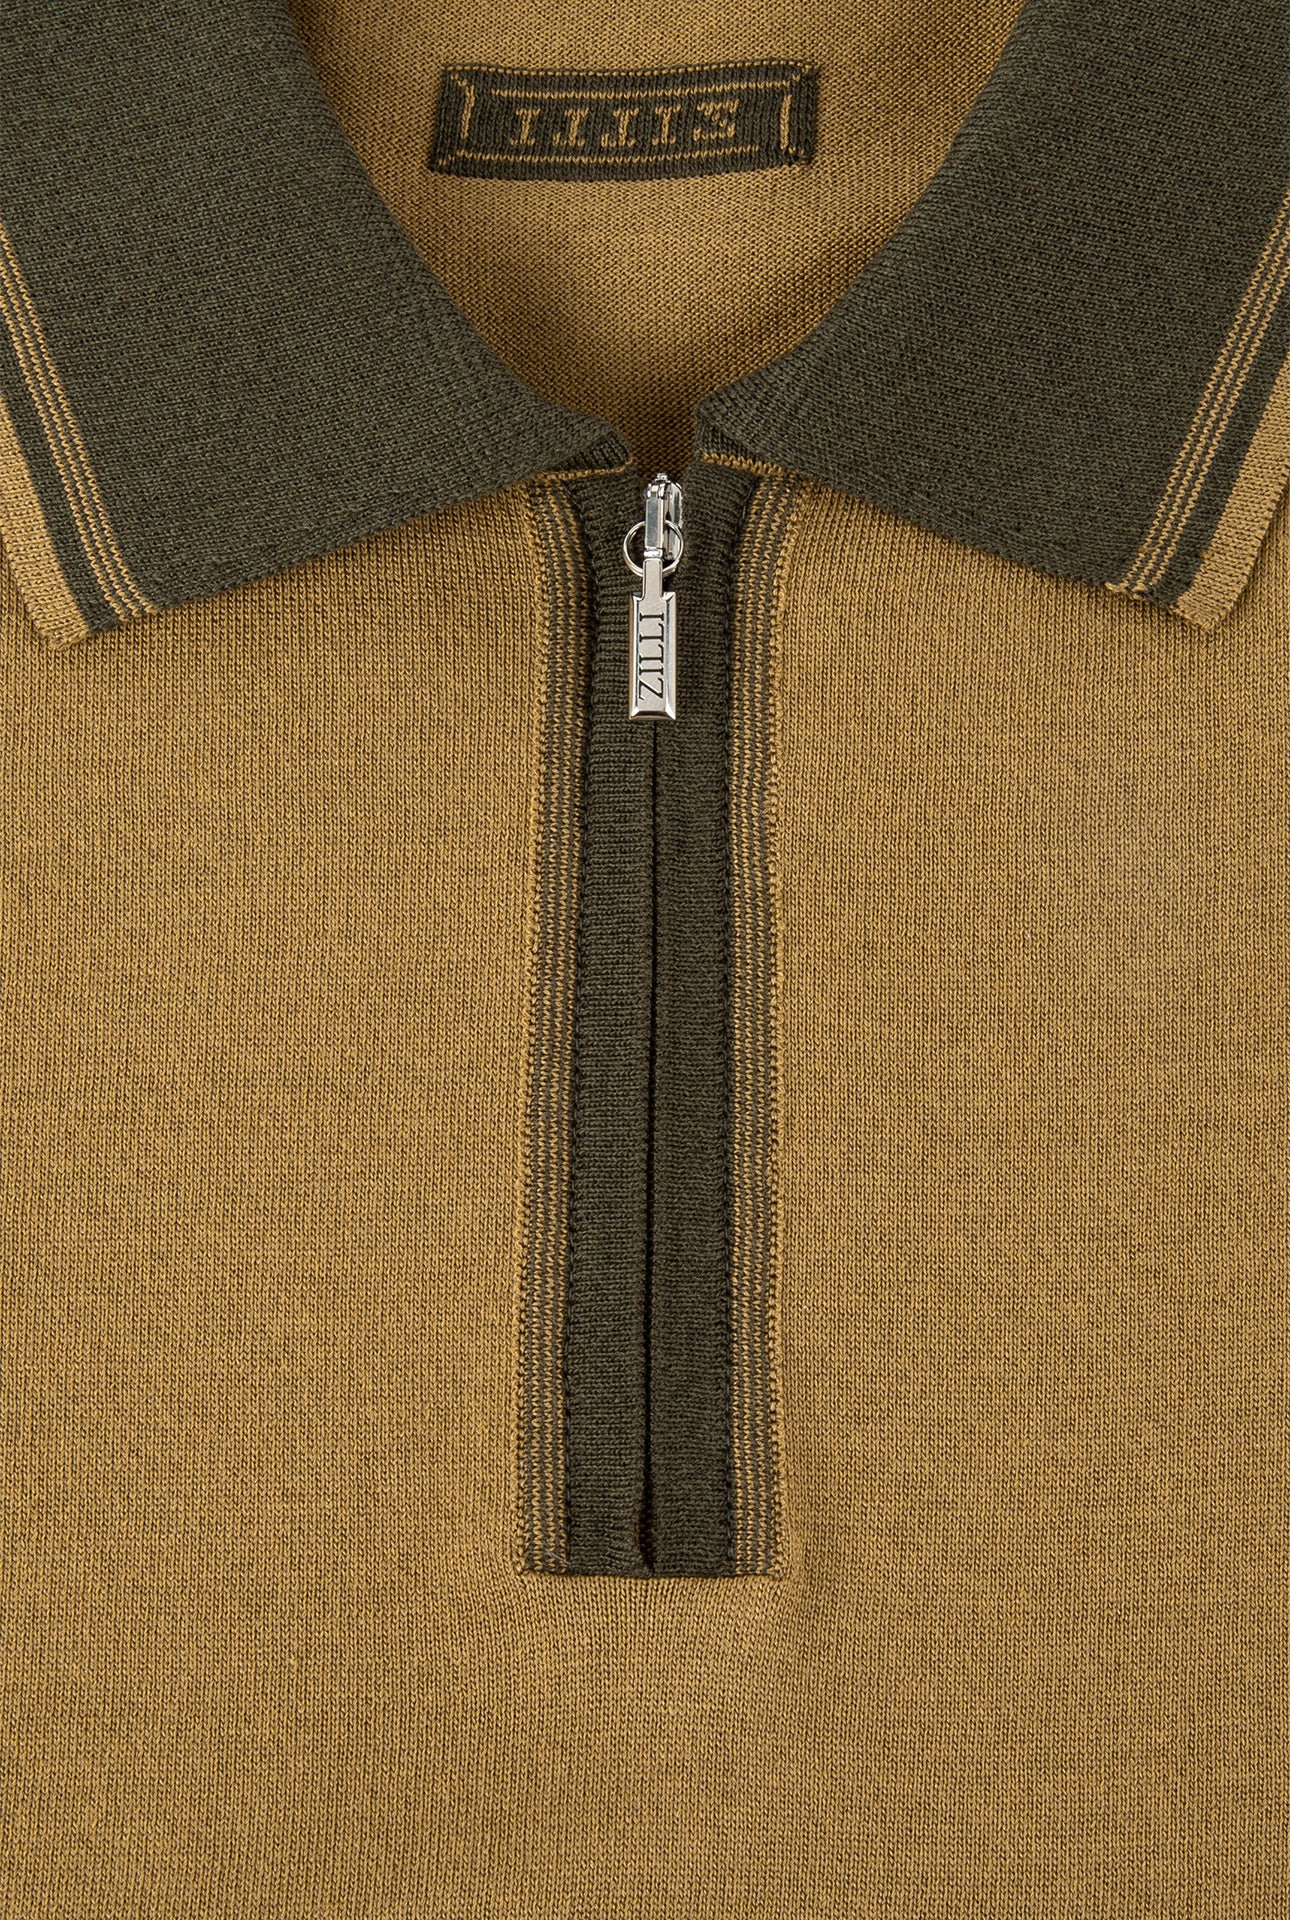 Short Sleeve Zipped Polo